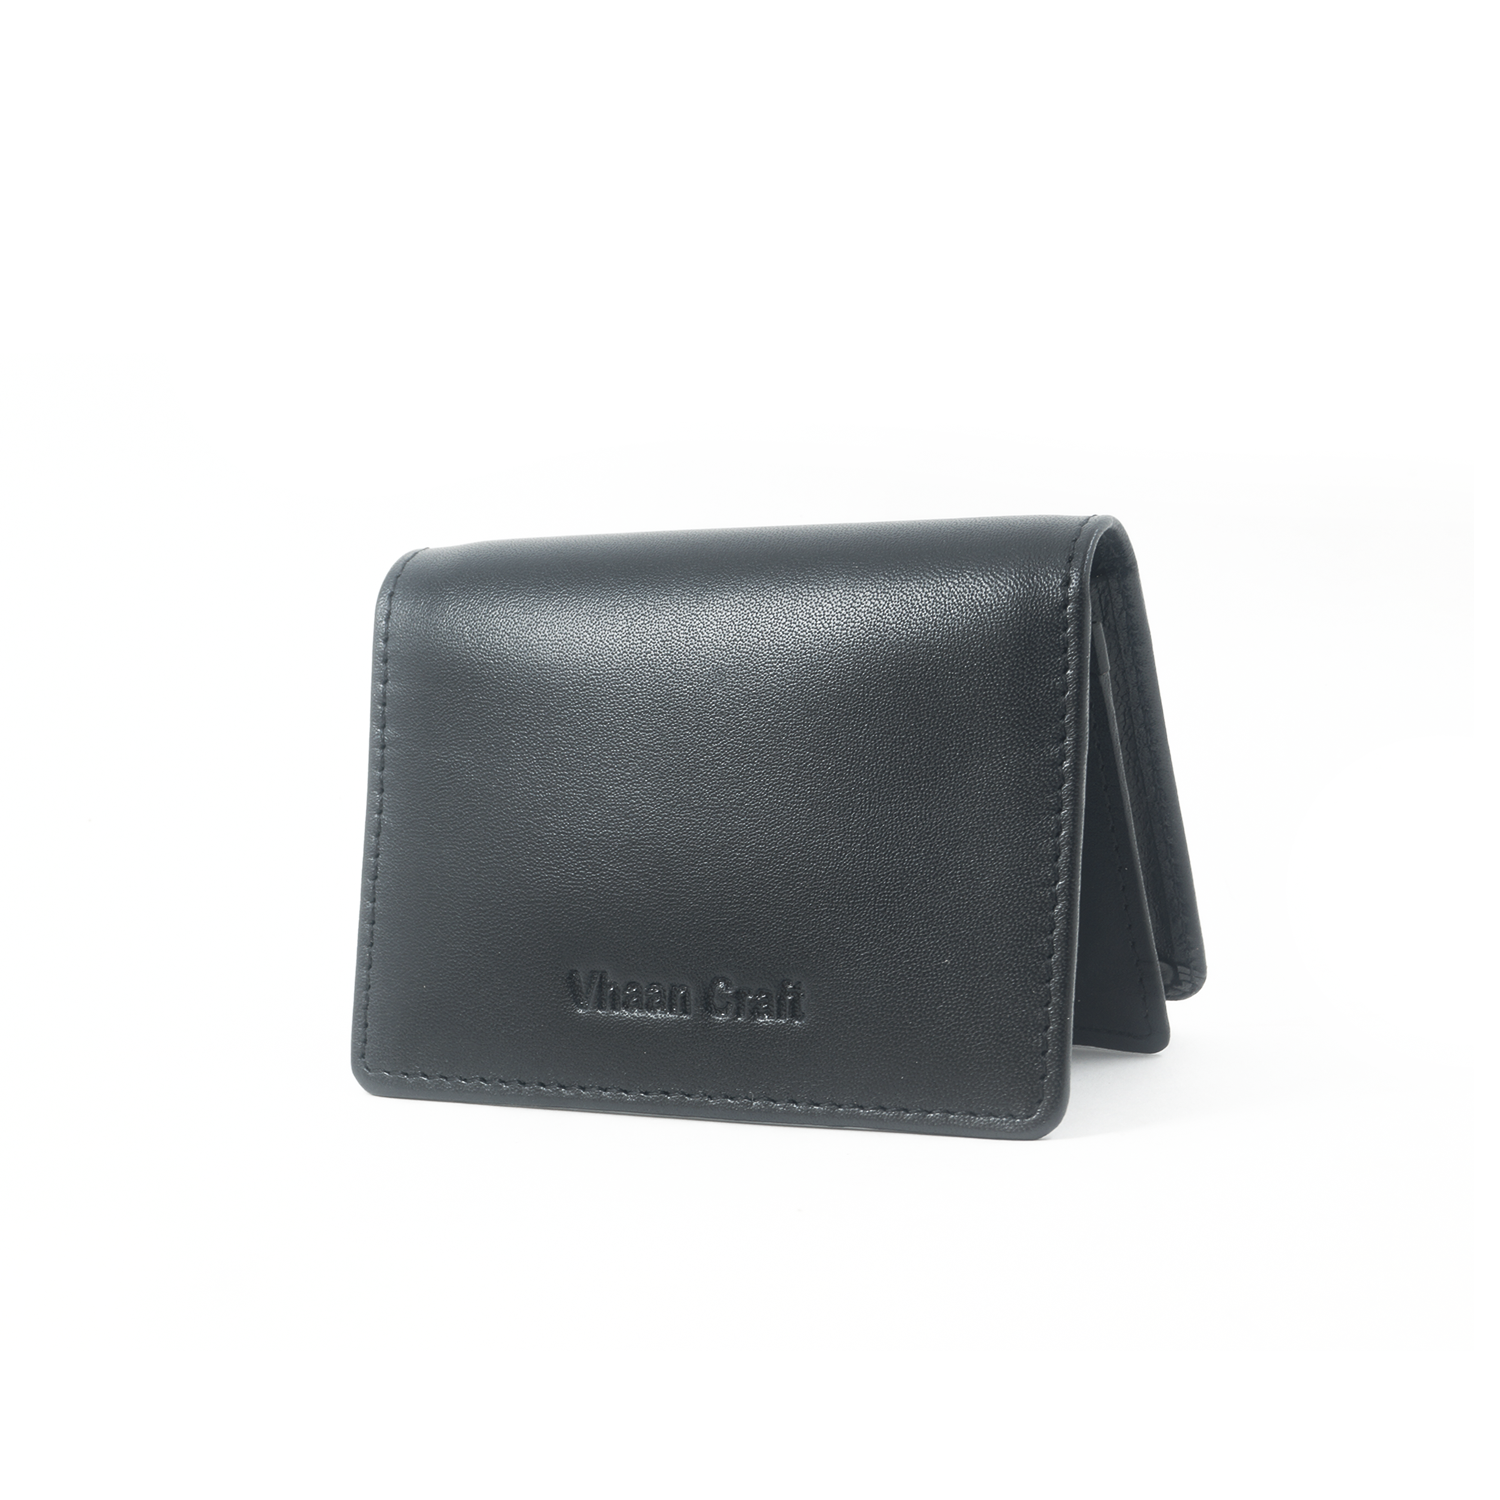 Shop this iconic grey and black handbag at a great price – Purse Bazar